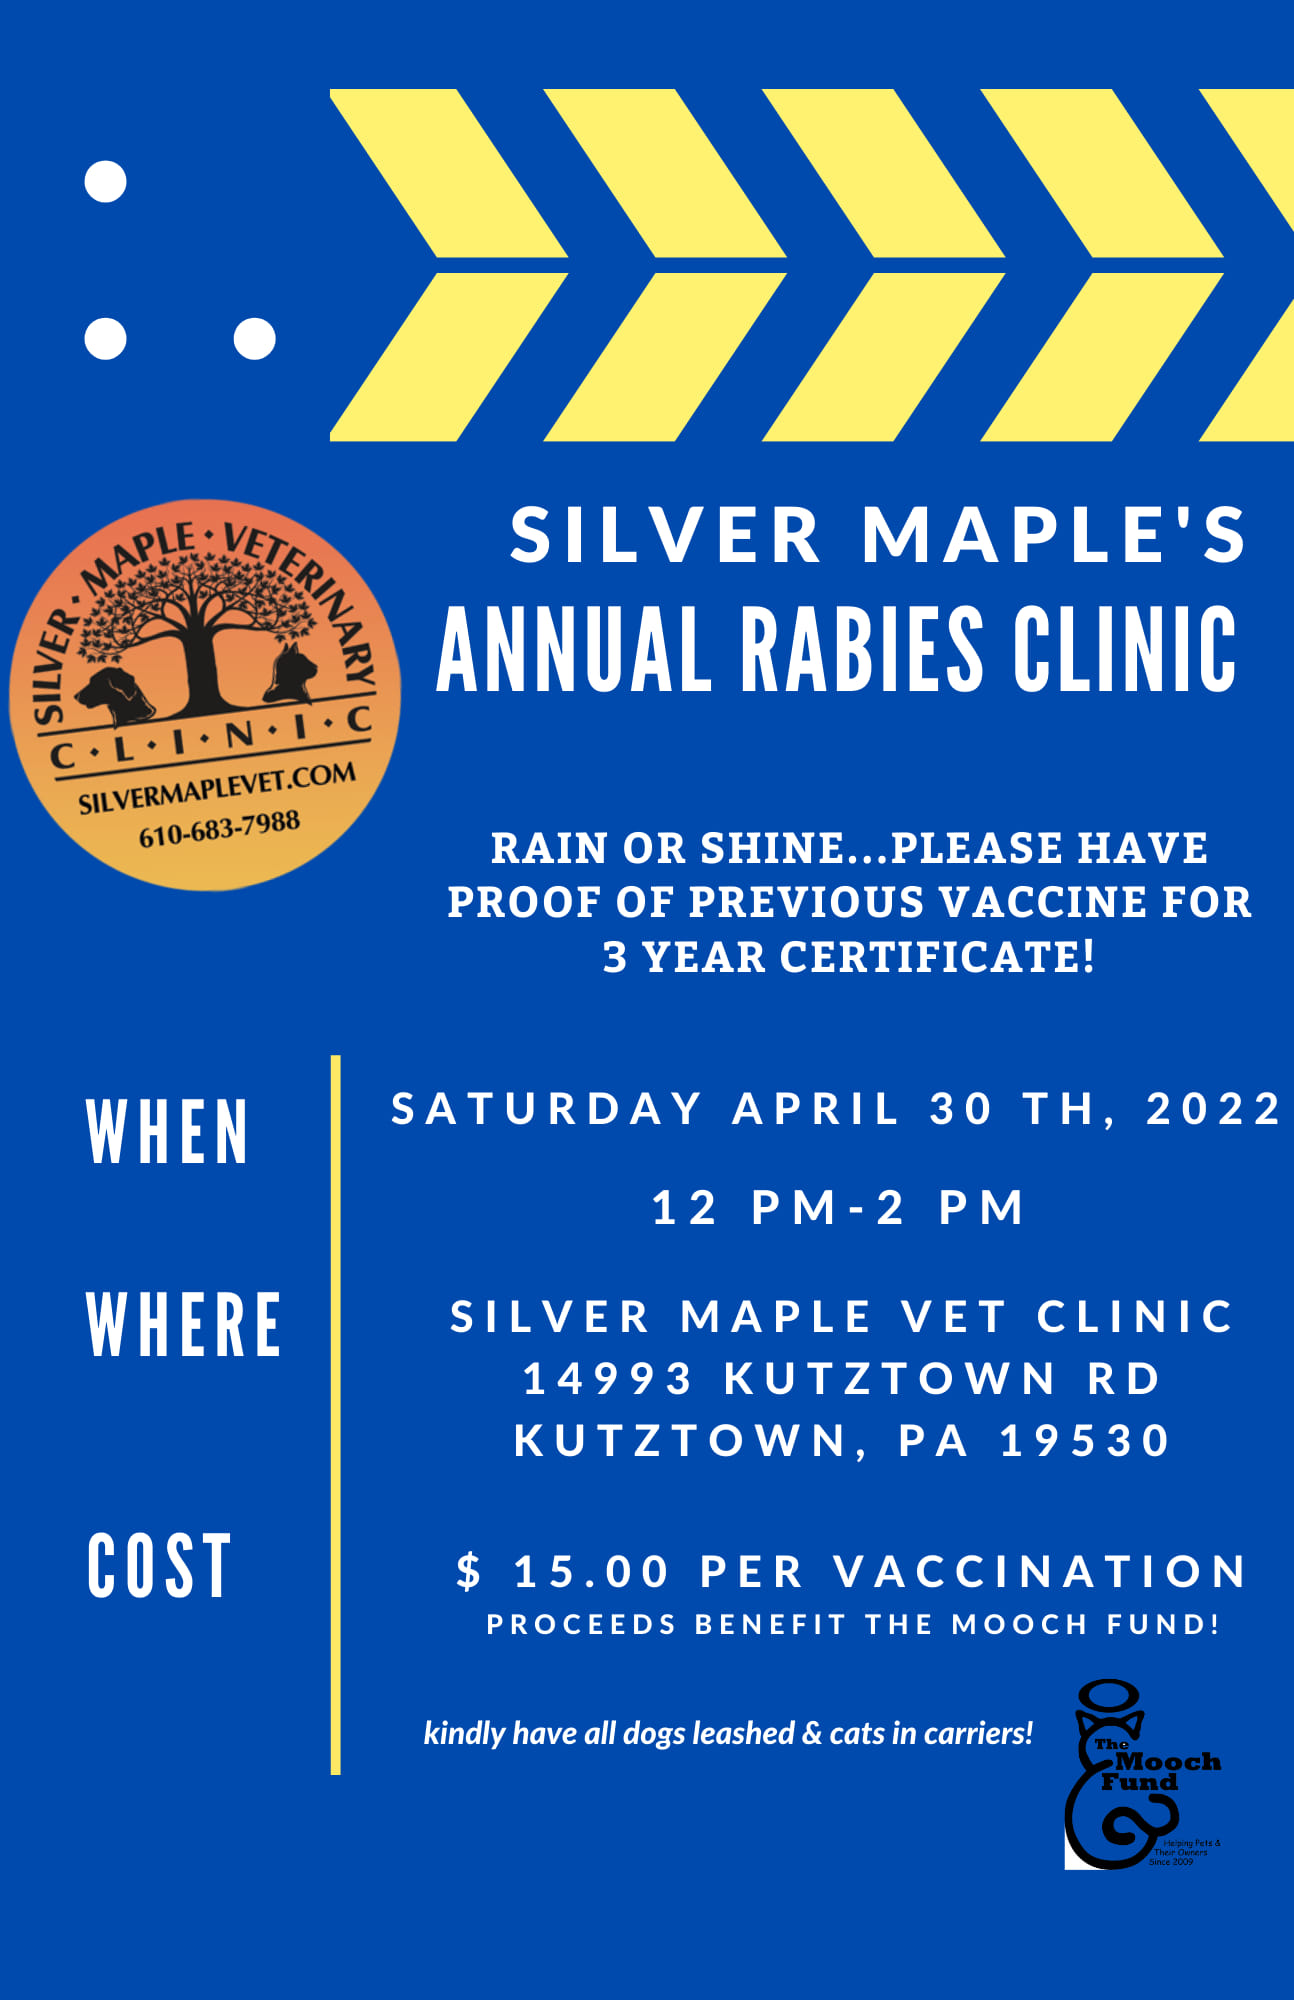 Silver Maple Veterinary Clinic: Yoder Samuel S DVM 14993 Kutztown Rd, Kutztown Pennsylvania 19530